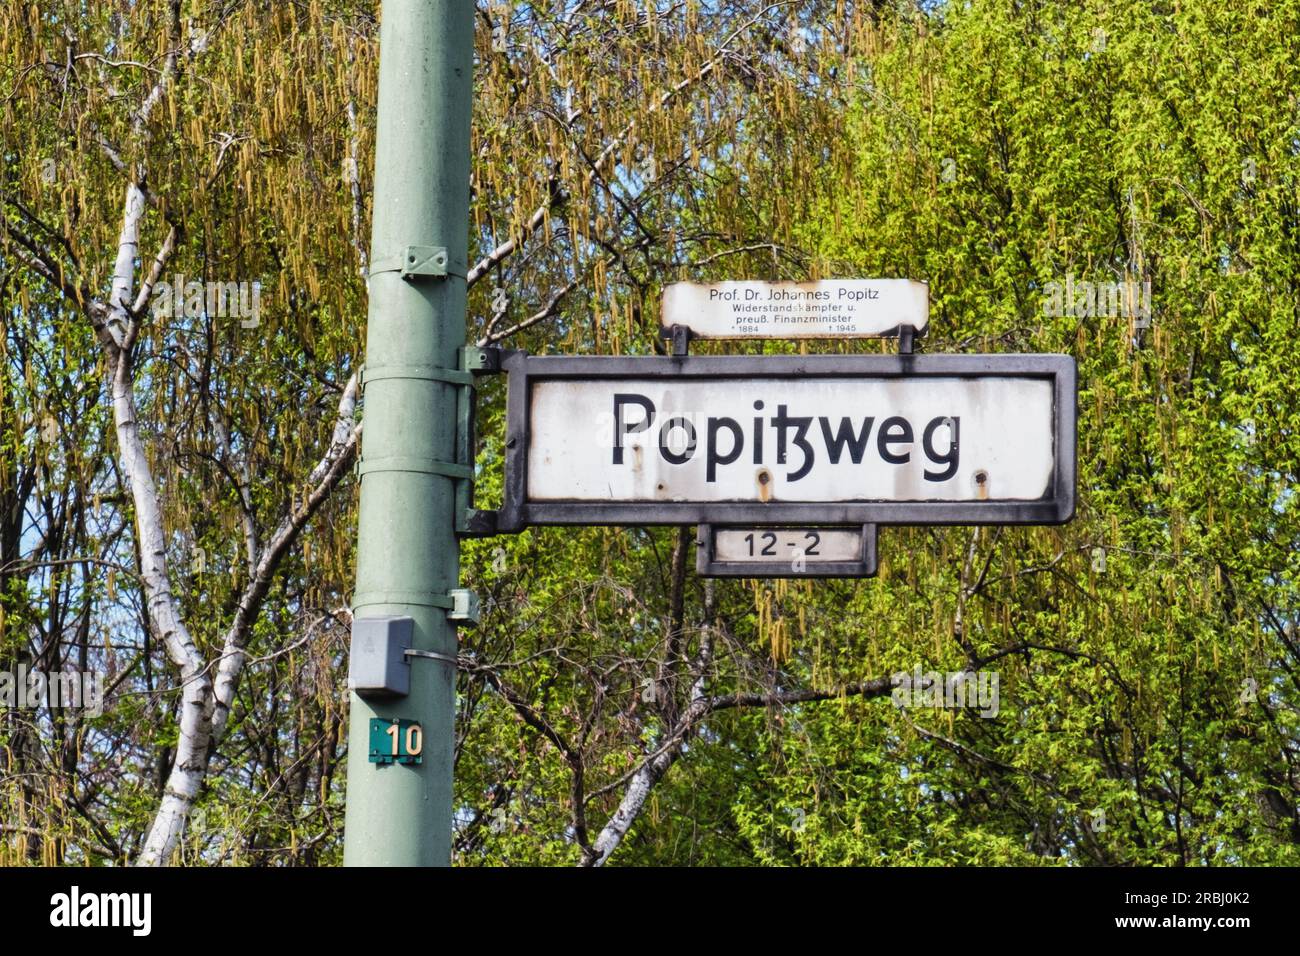 Popitzweg street sign, Spandau, Berlin. Road named after Prof Dr Johannes Popitz, resistance fighter and Prussian Finace Mininster Stock Photo